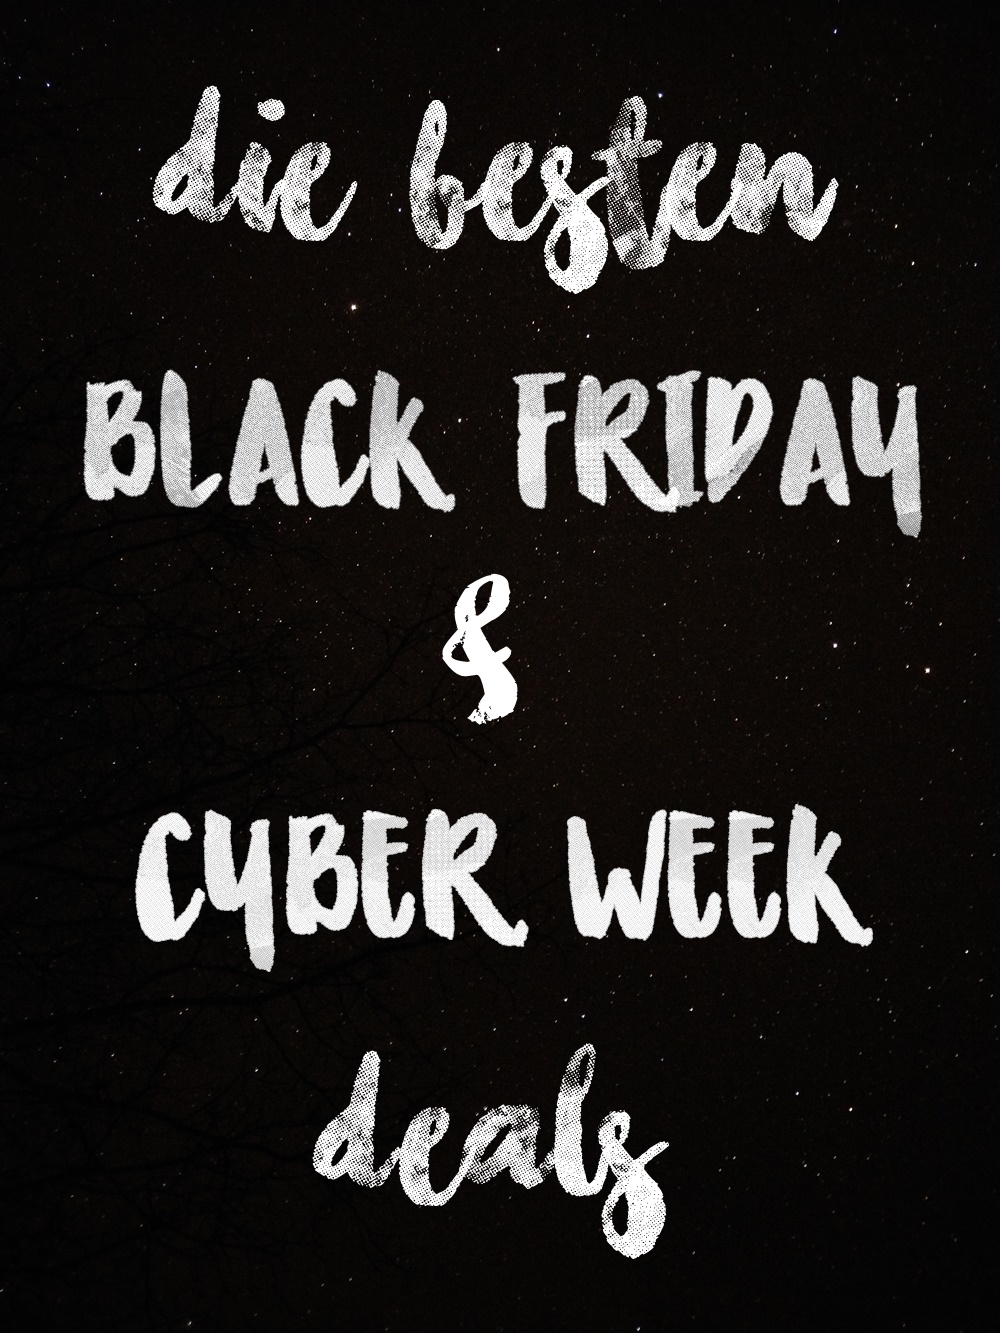 Die besten Black Friday & Cyber Week Deals